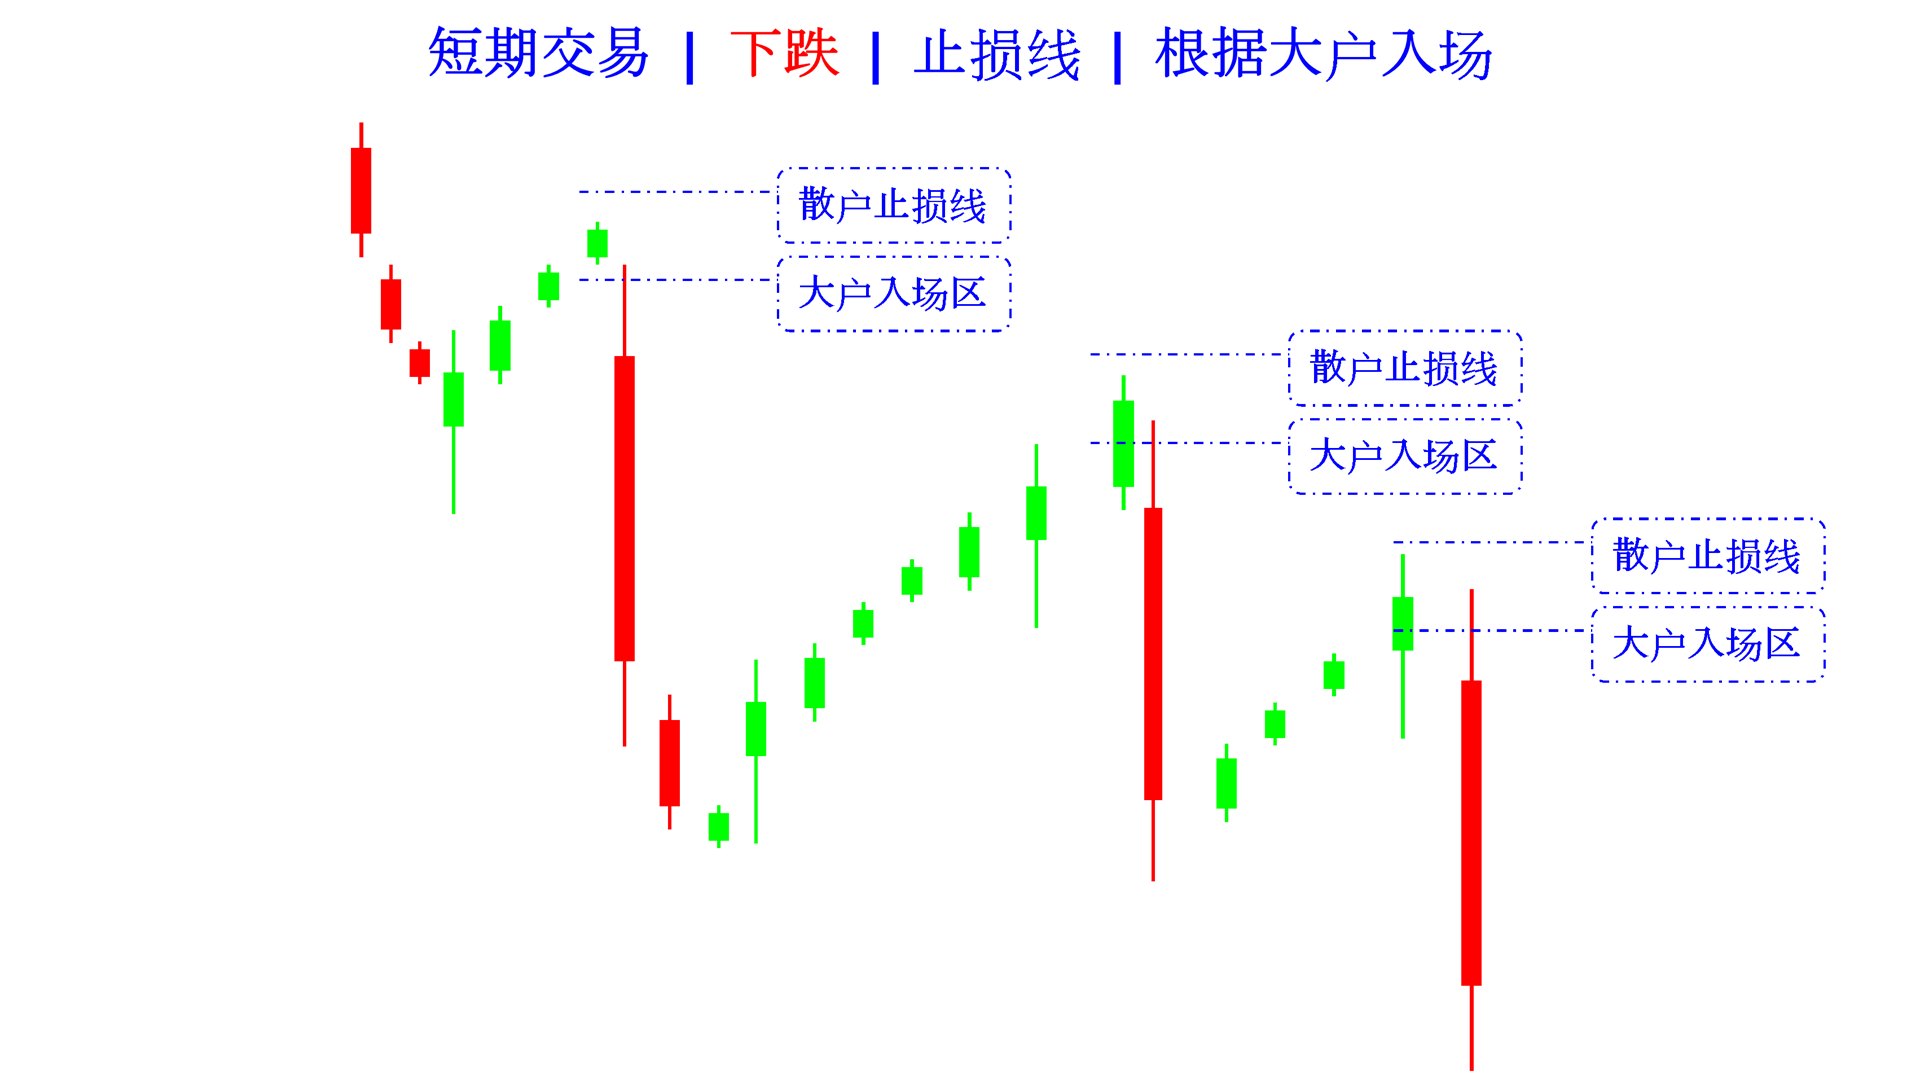 stop loss line higher major in falling cn